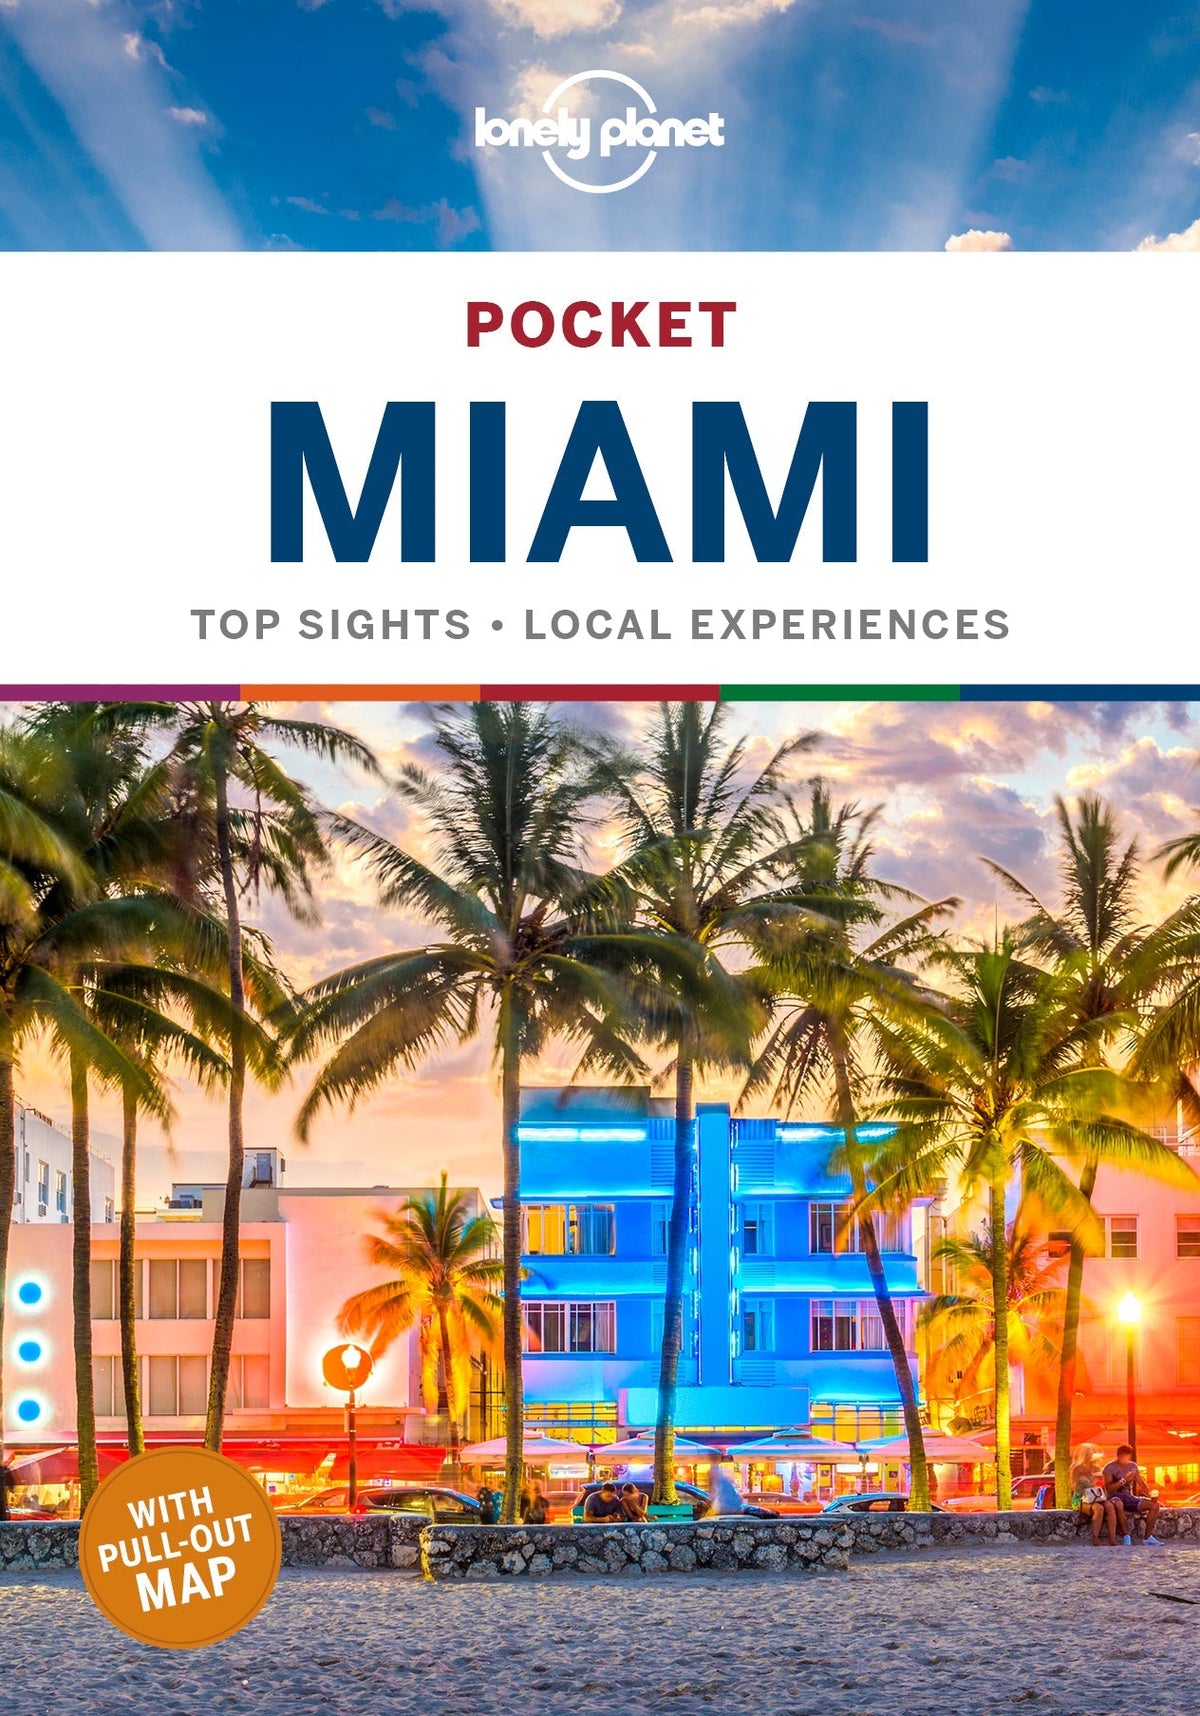 Pocket Miami preview